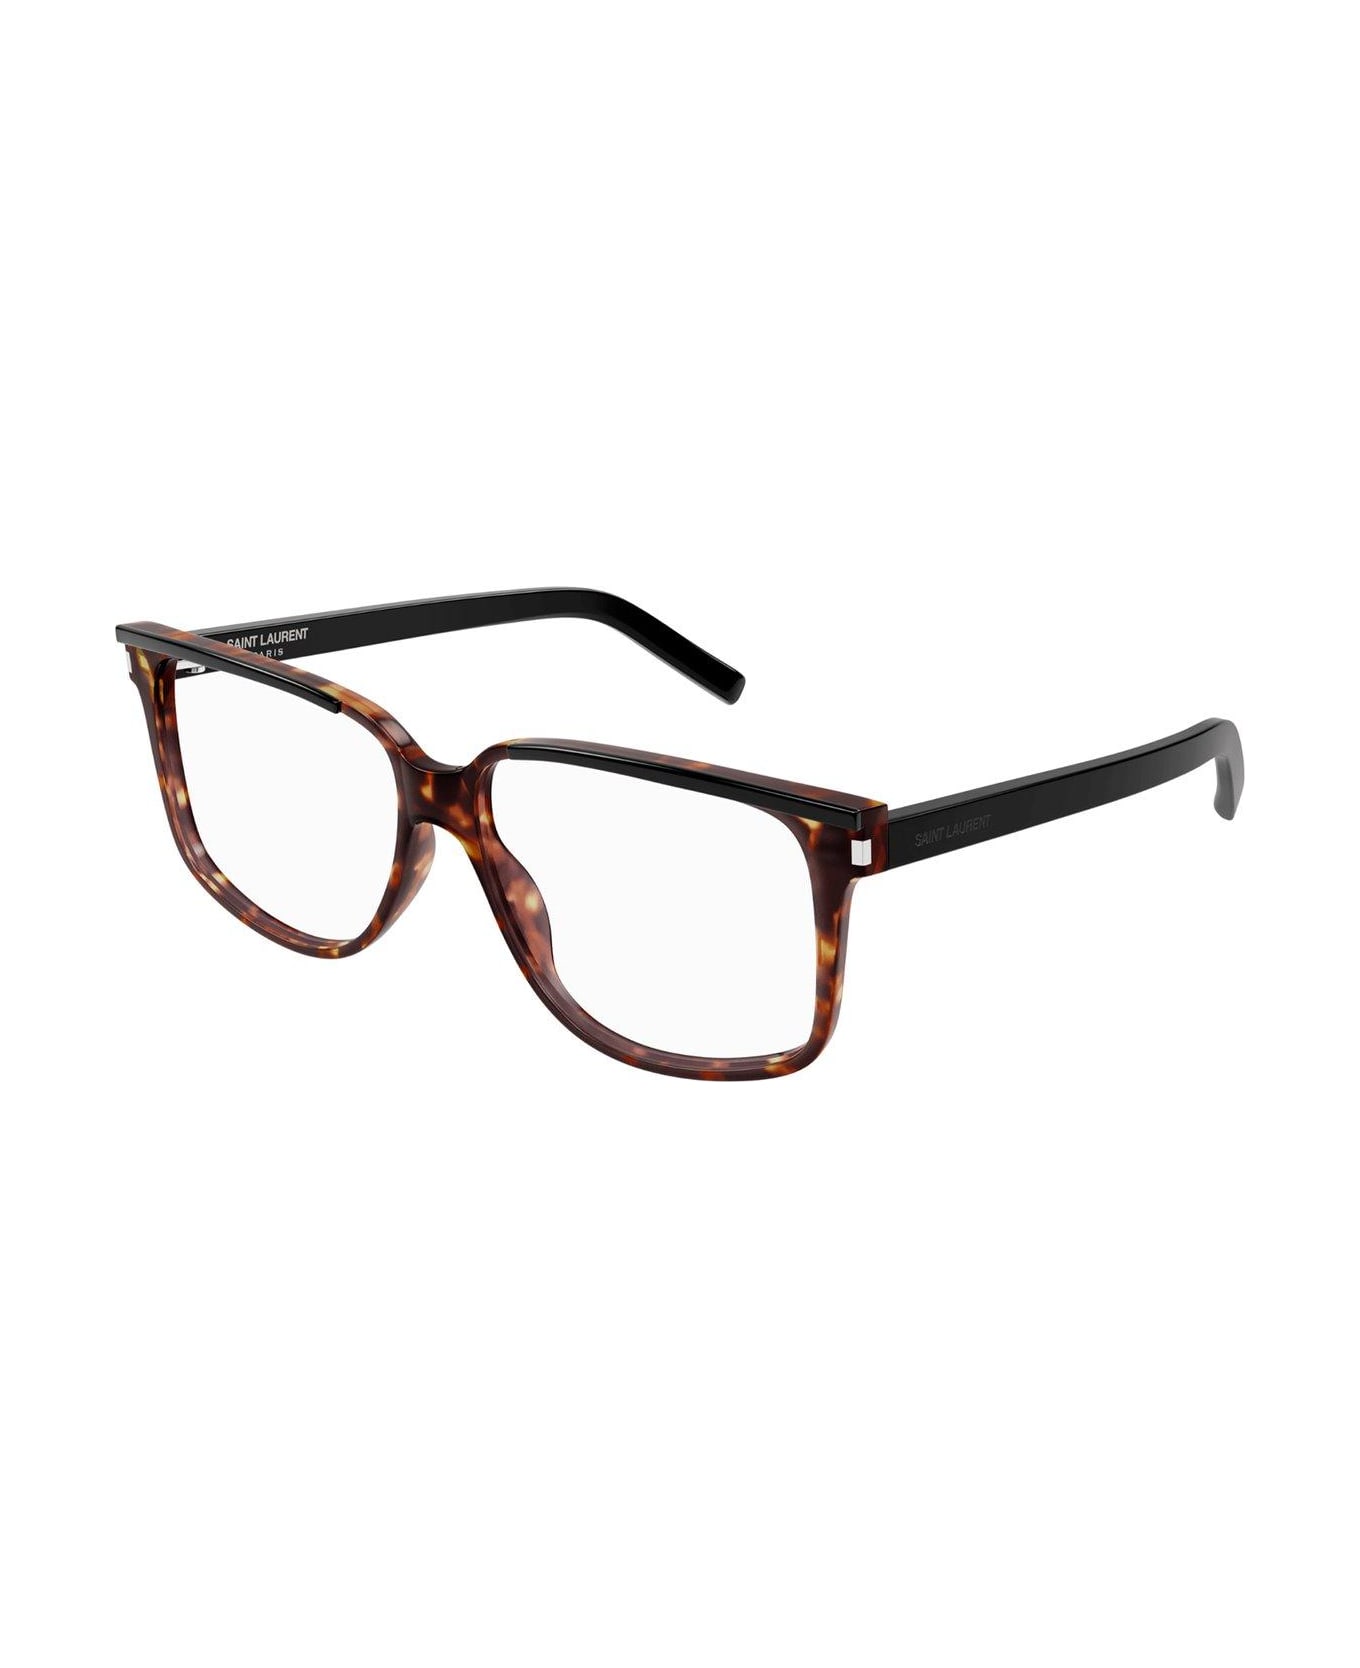 Saint Laurent Eyewear Square Frame Glasses - 001 black black transpare